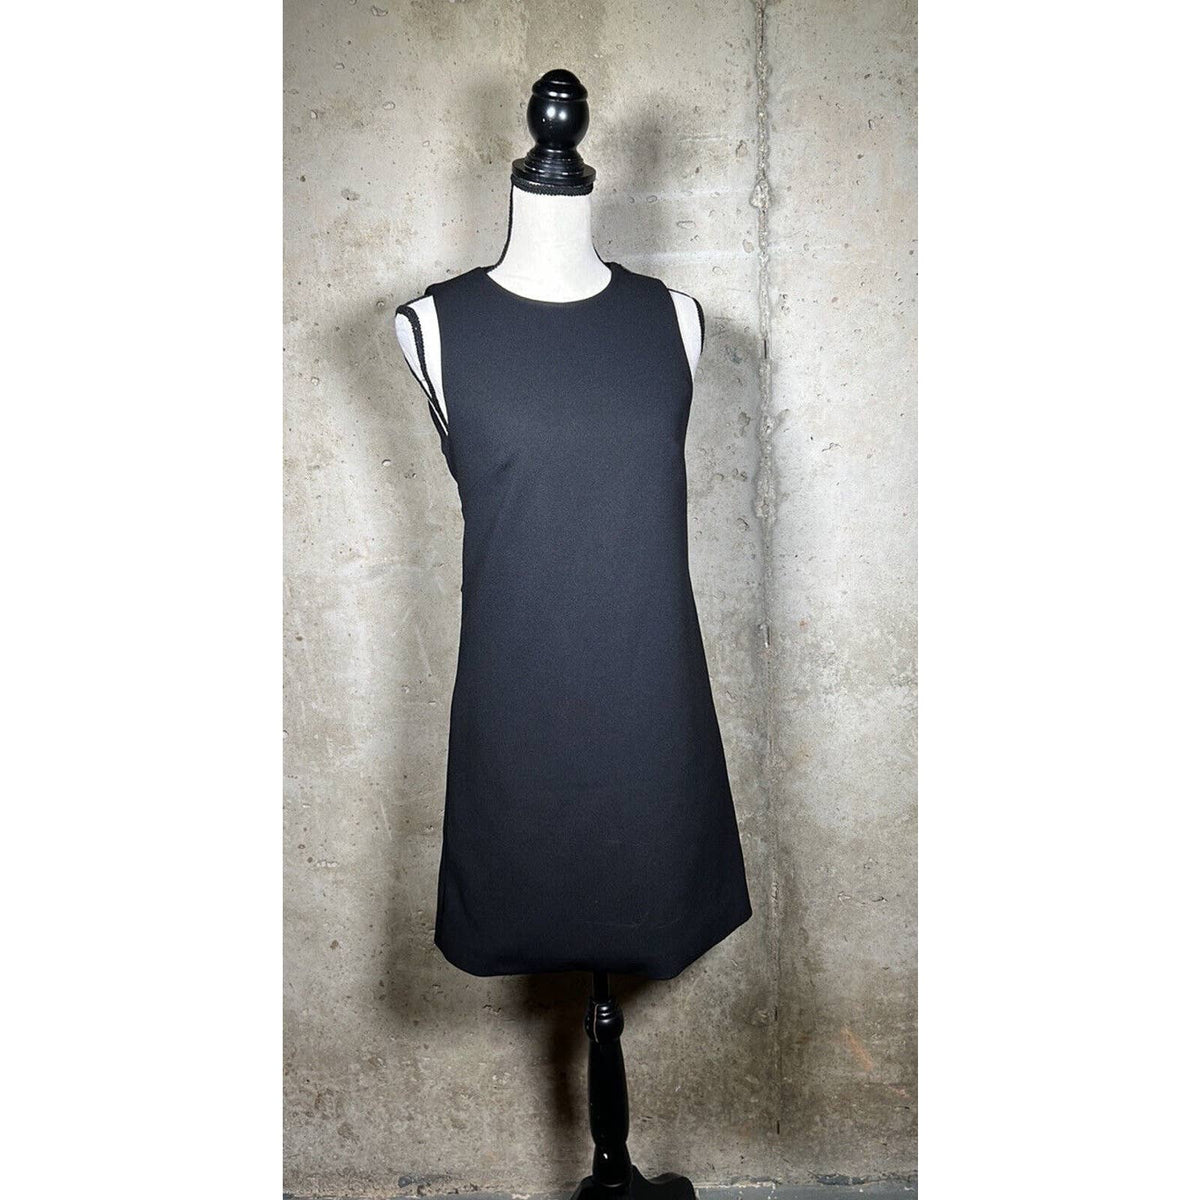 Tibi Black Sleeveless Button Open Back Dress Sz.2